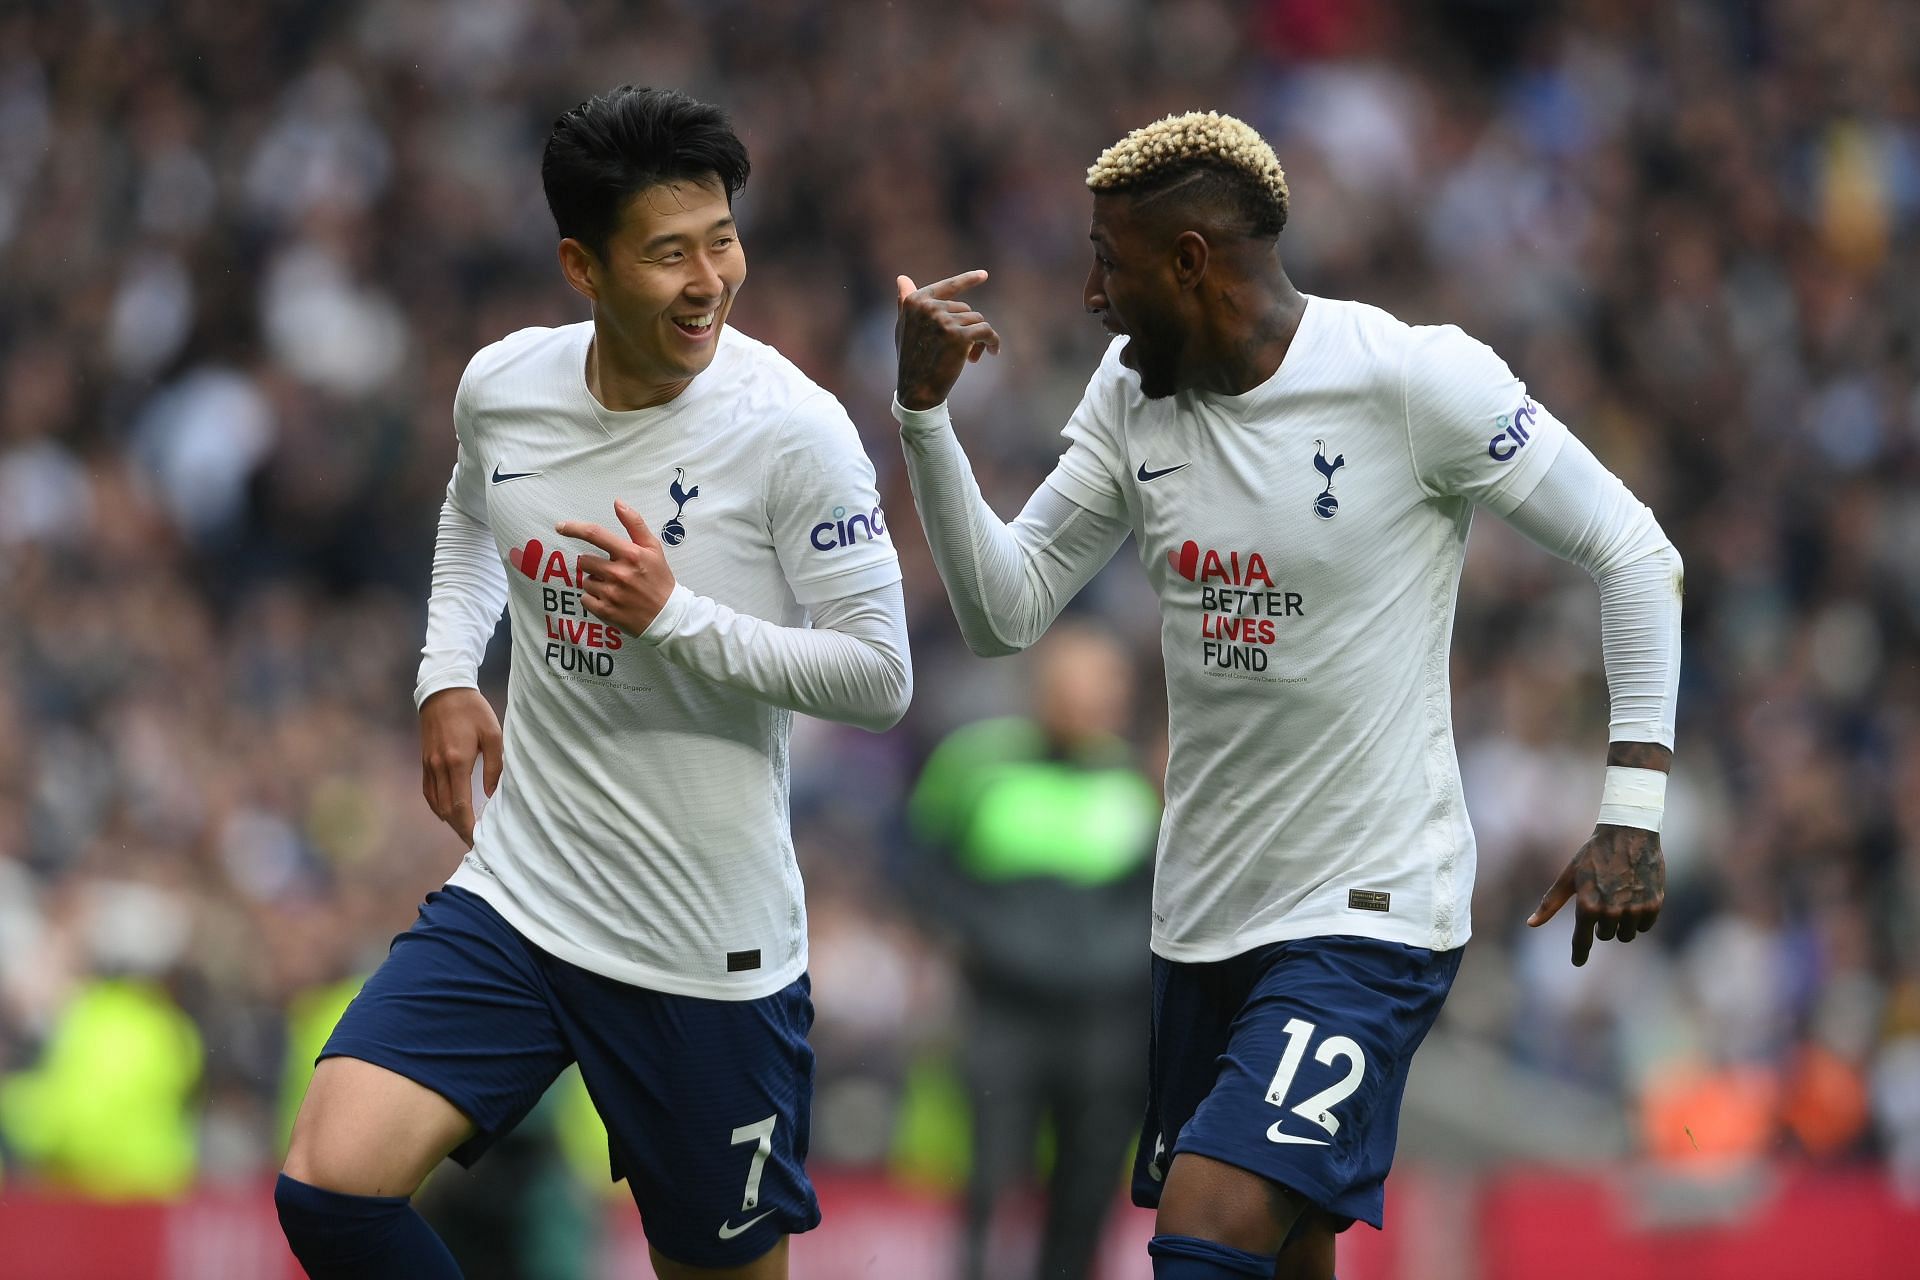 Son Heung-min (L, #7) and Emerson Royal (R, 12) celebrate Tottenham Hotspur&#039;s goal